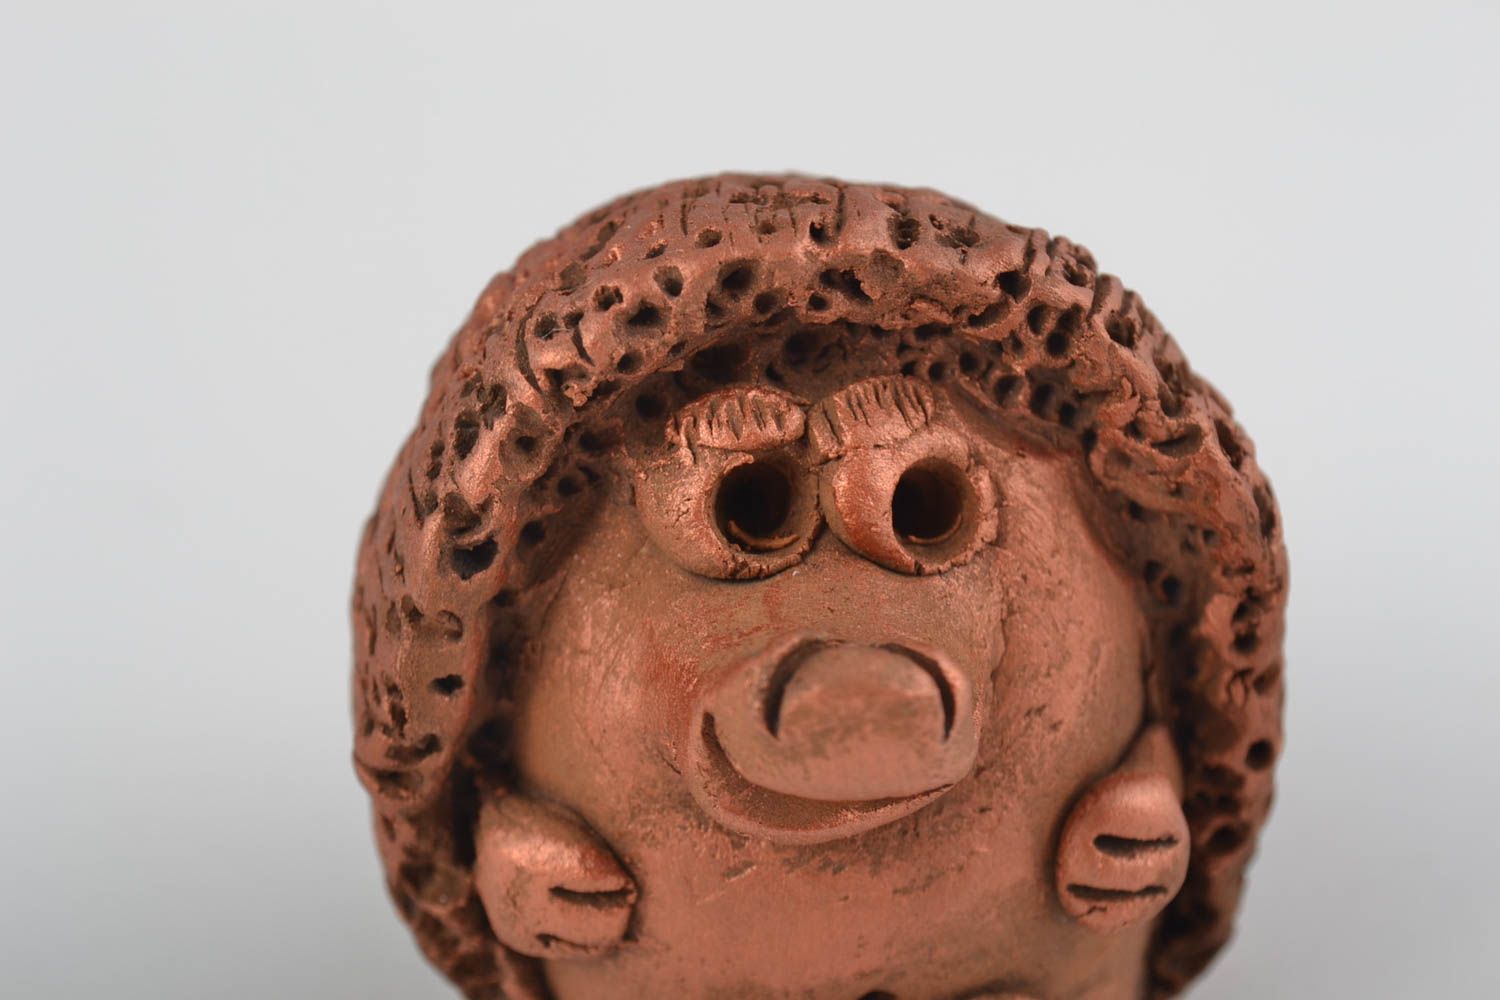 Statuina fatta a mano figurina riccio in ceramica souvenir di terracotta foto 5